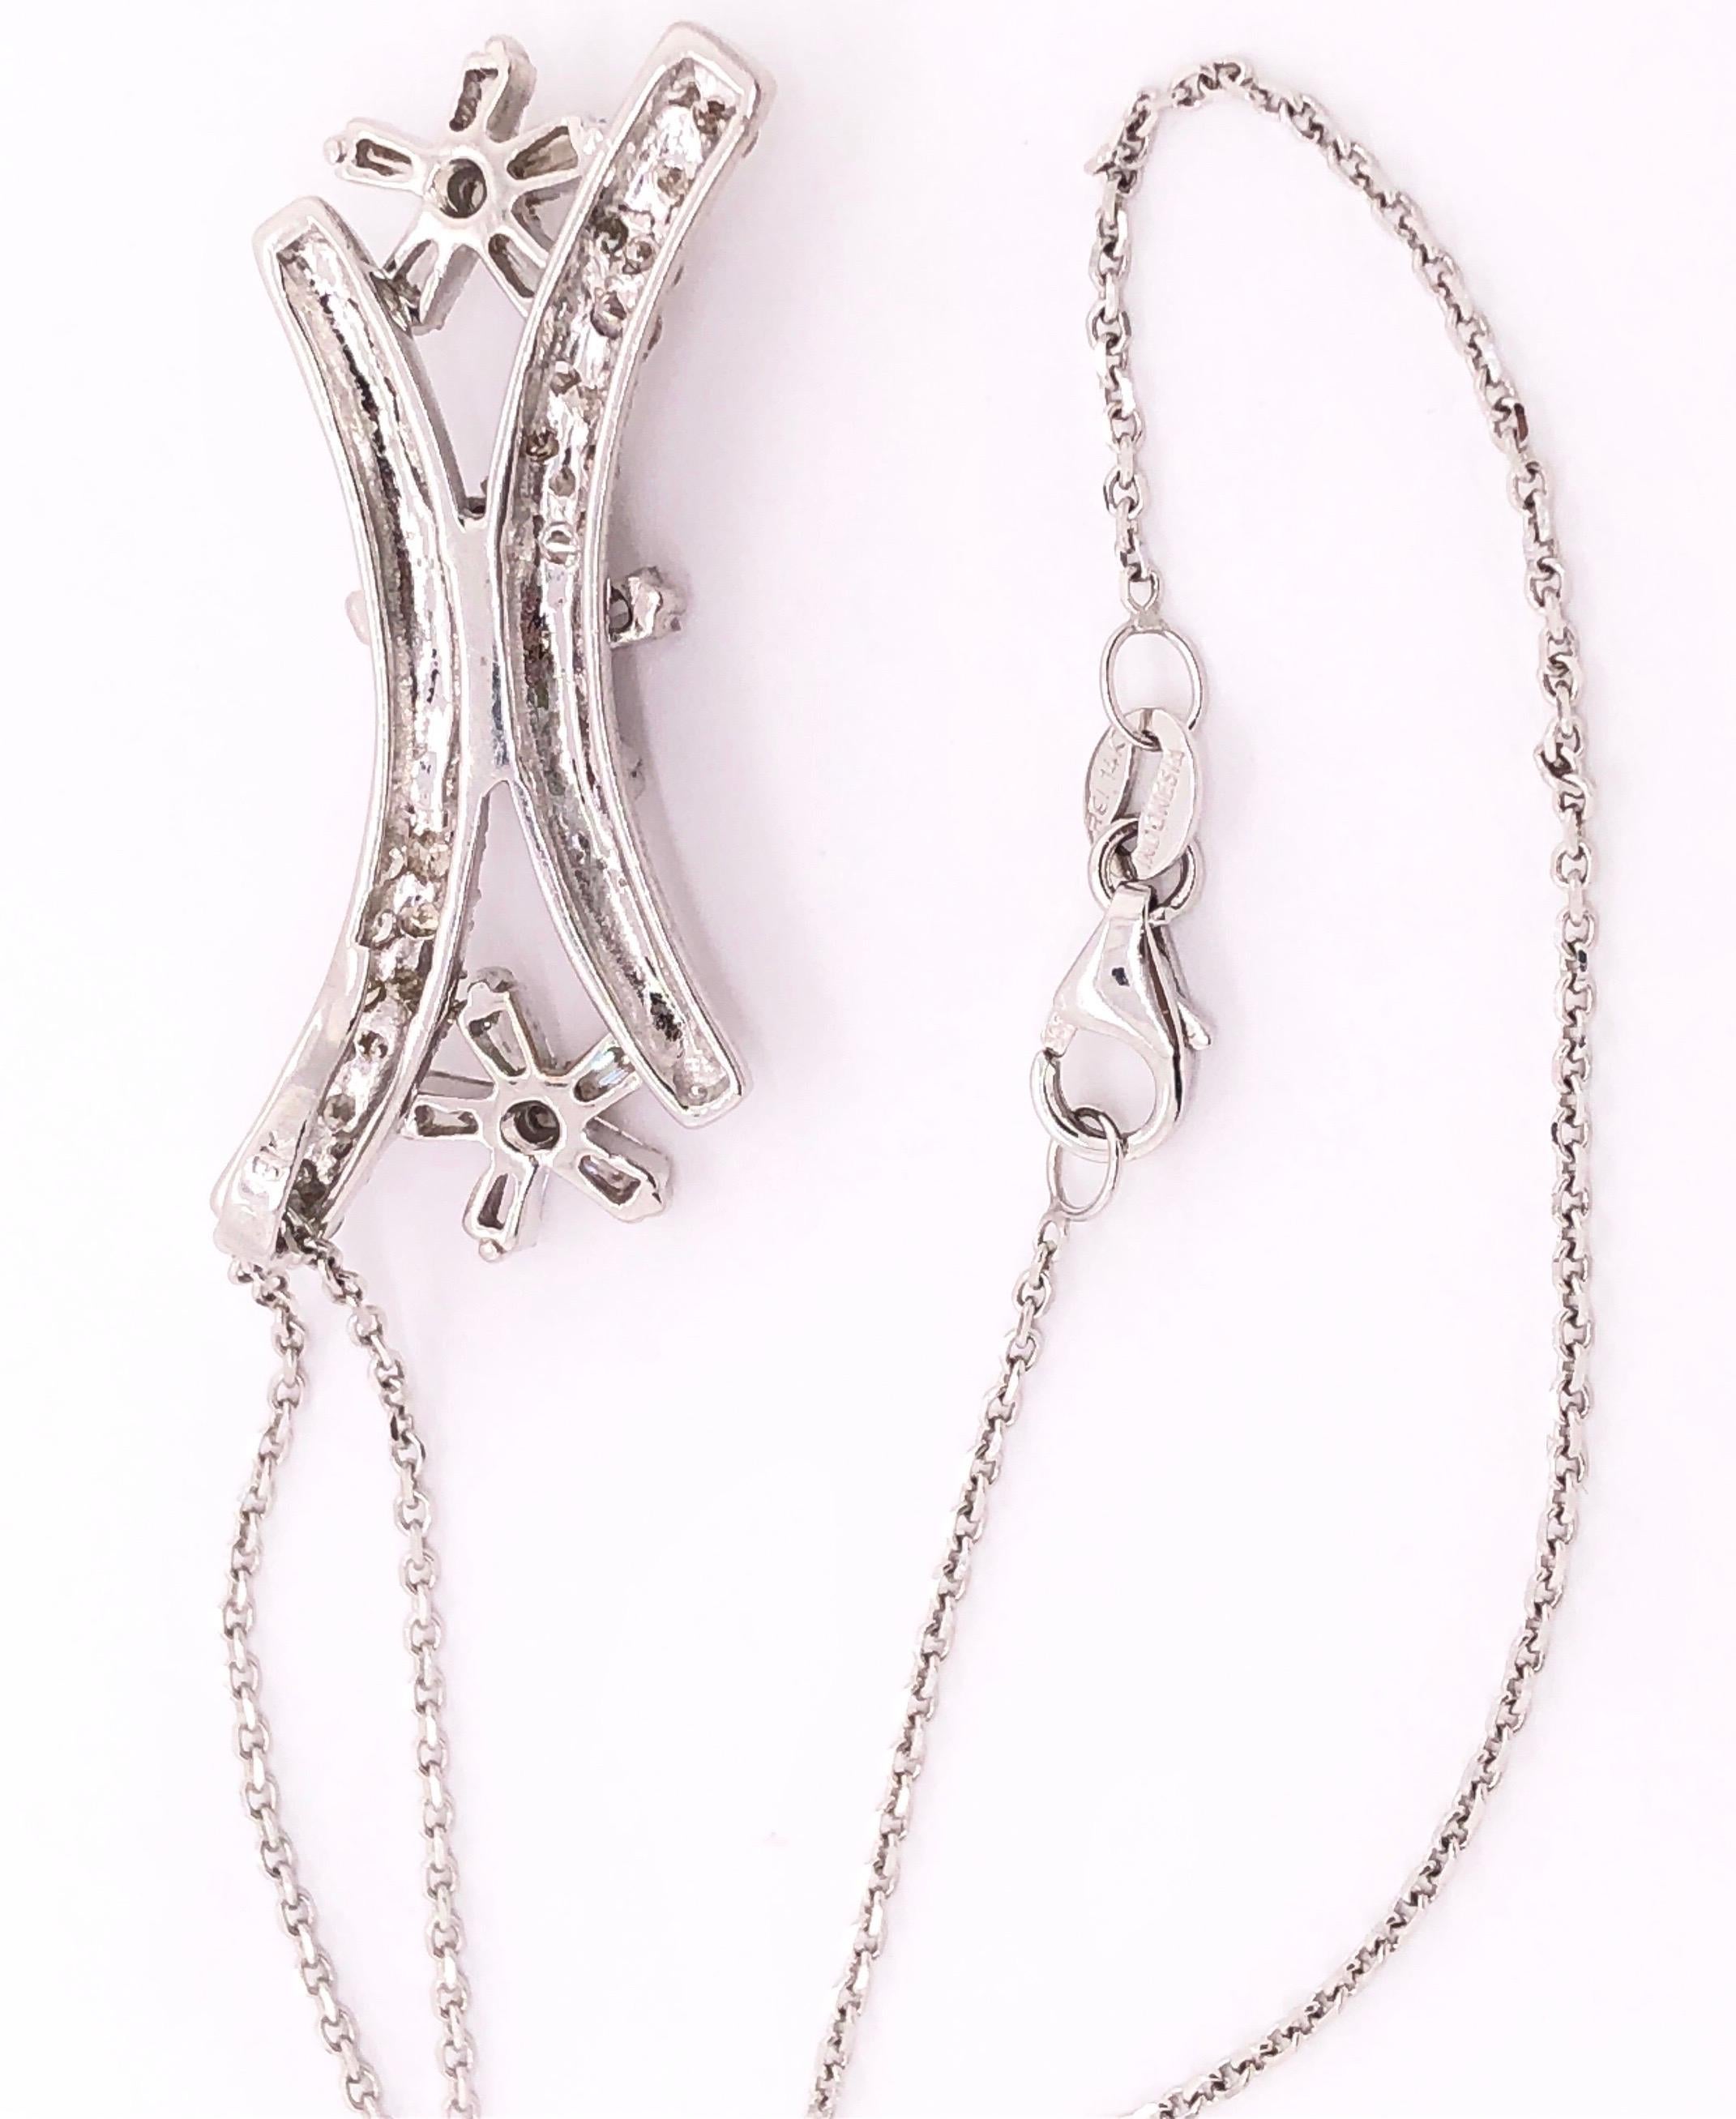 18 Karat White Gold Freeform Pendant Necklace with Diamonds For Sale 1